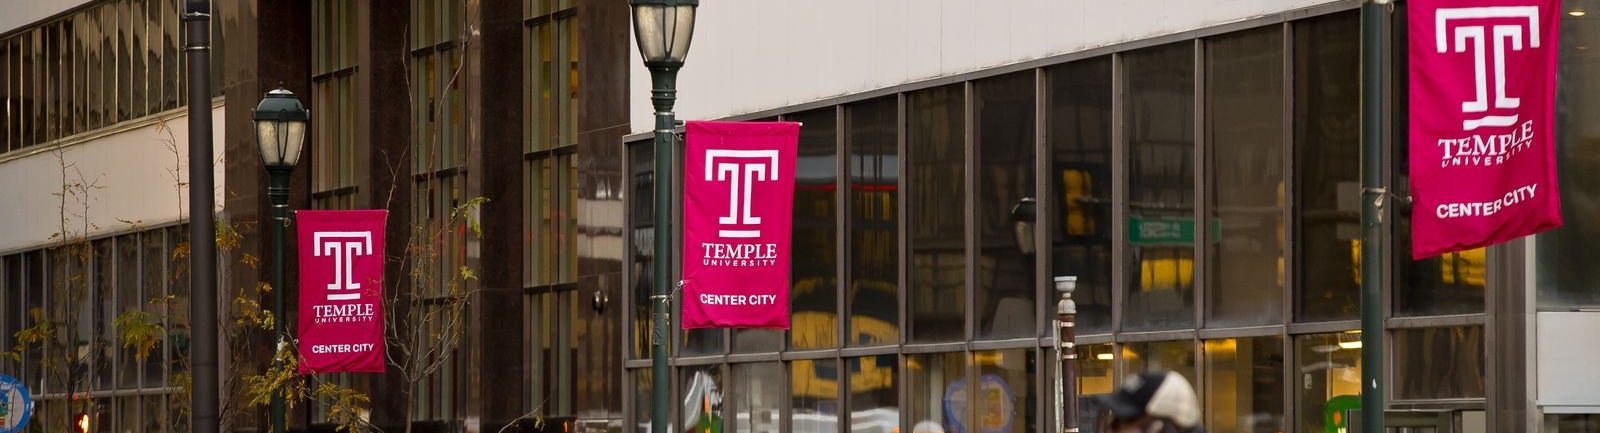 Temple University banners hanging in Center City Philadelphia.